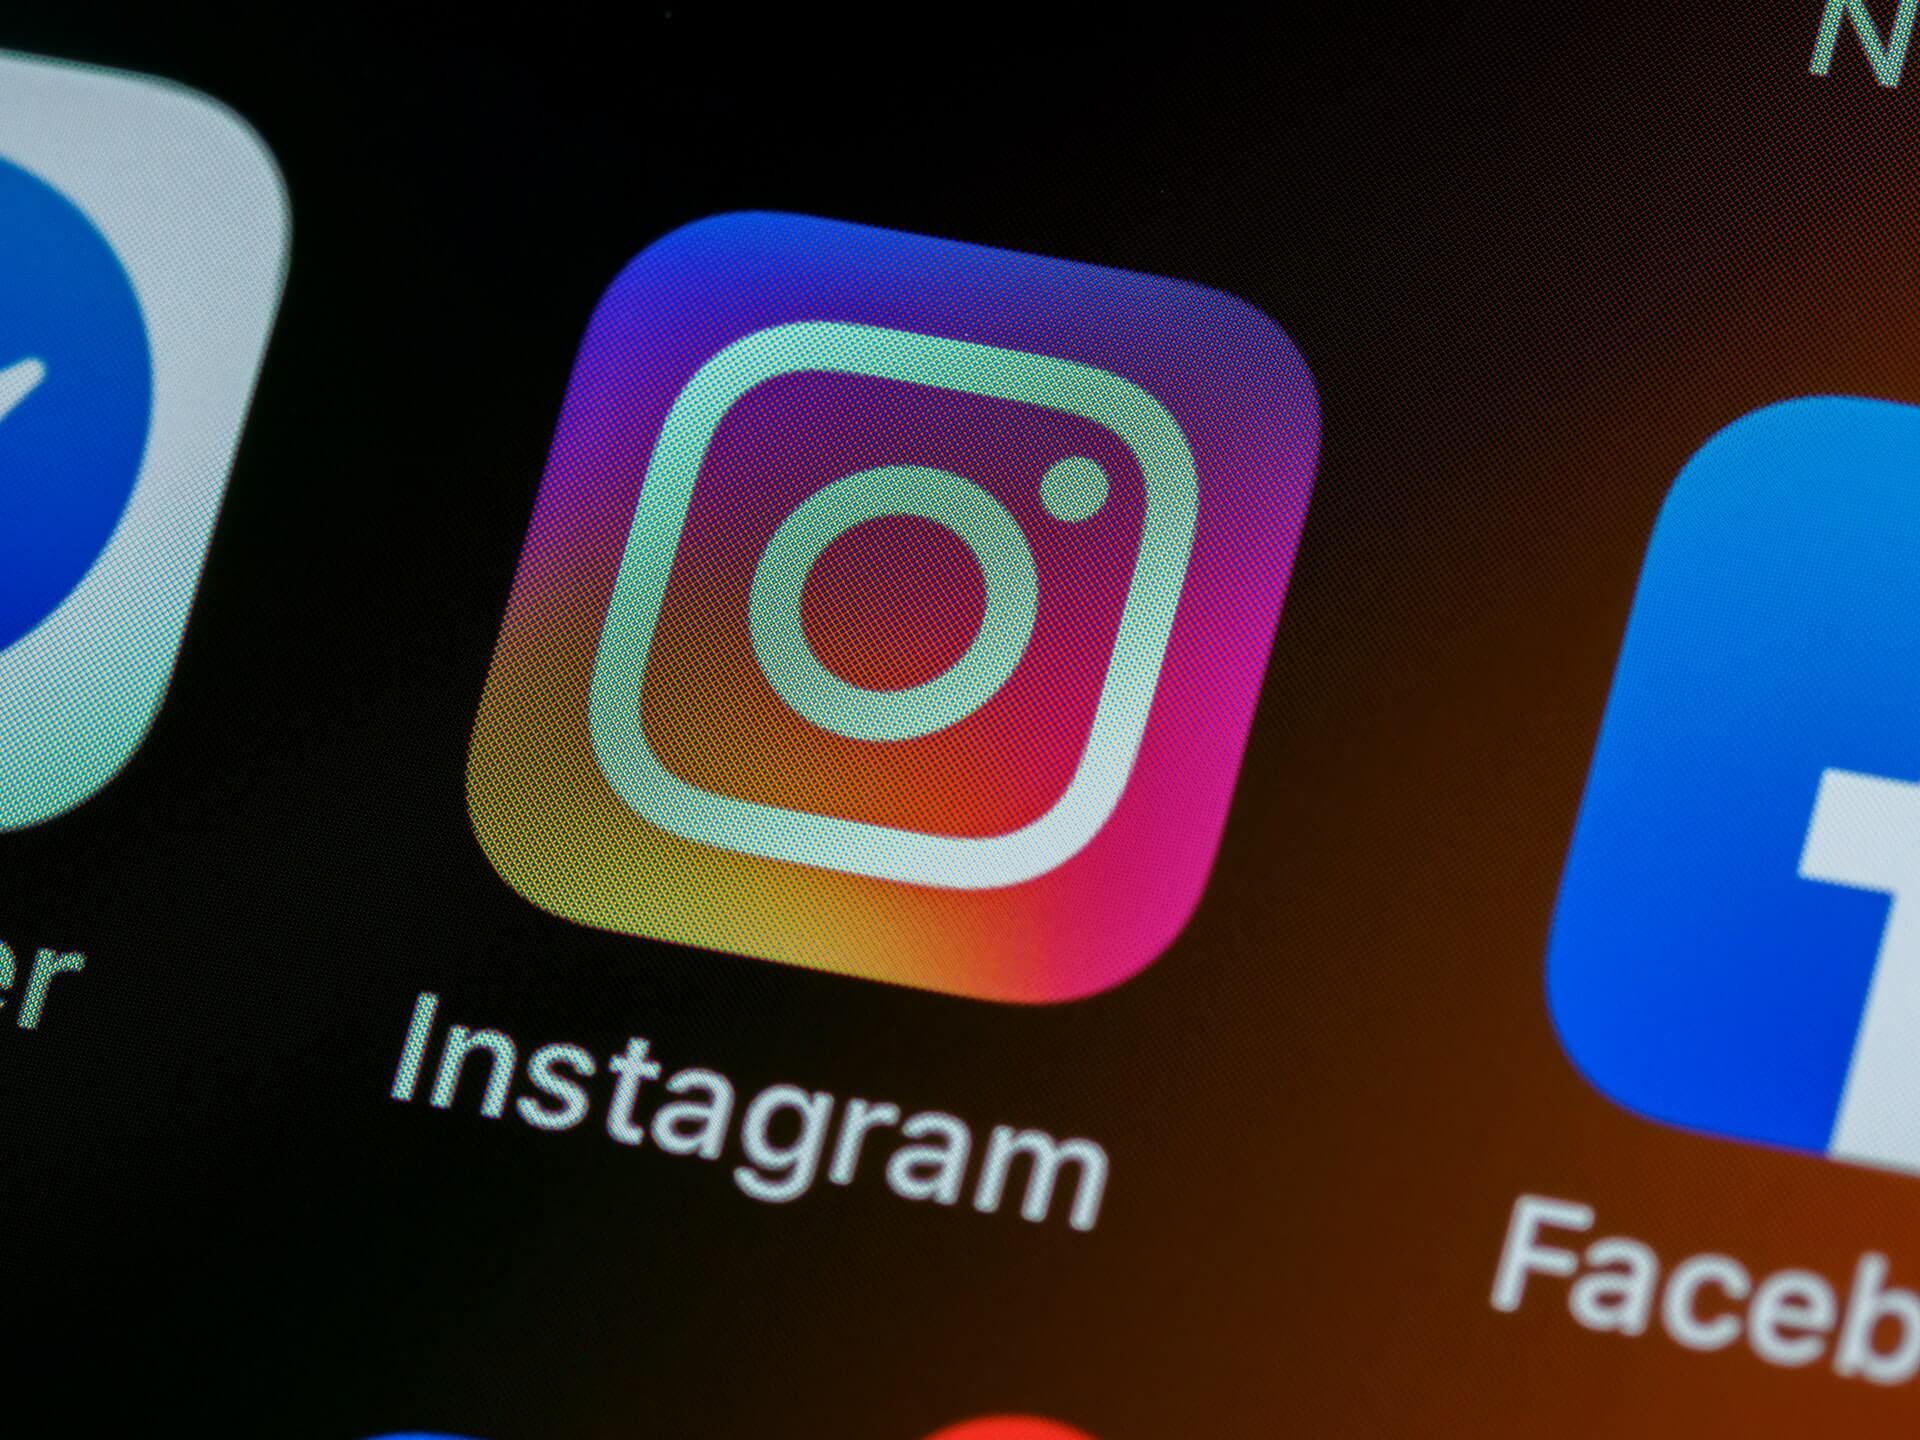 Best Instagram Influencer Marketing Techniques